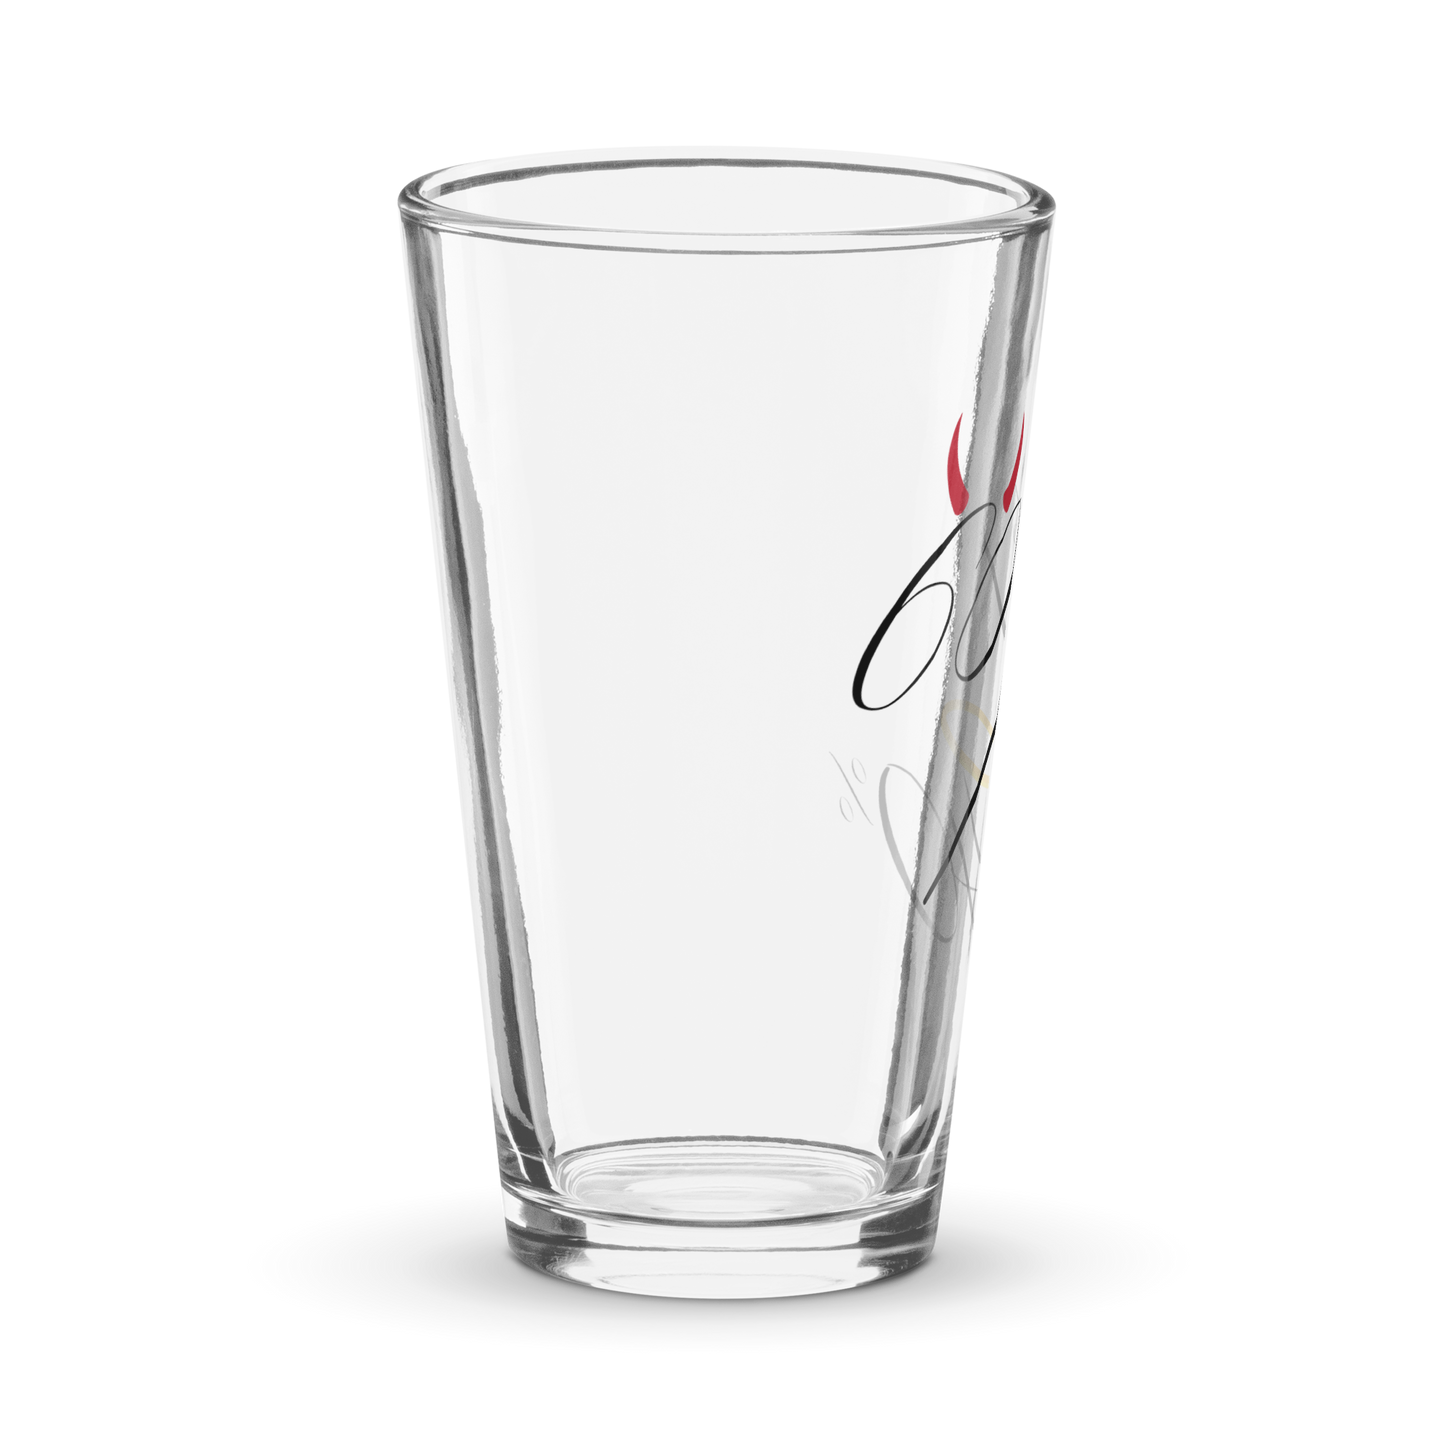 Shaker pint glass